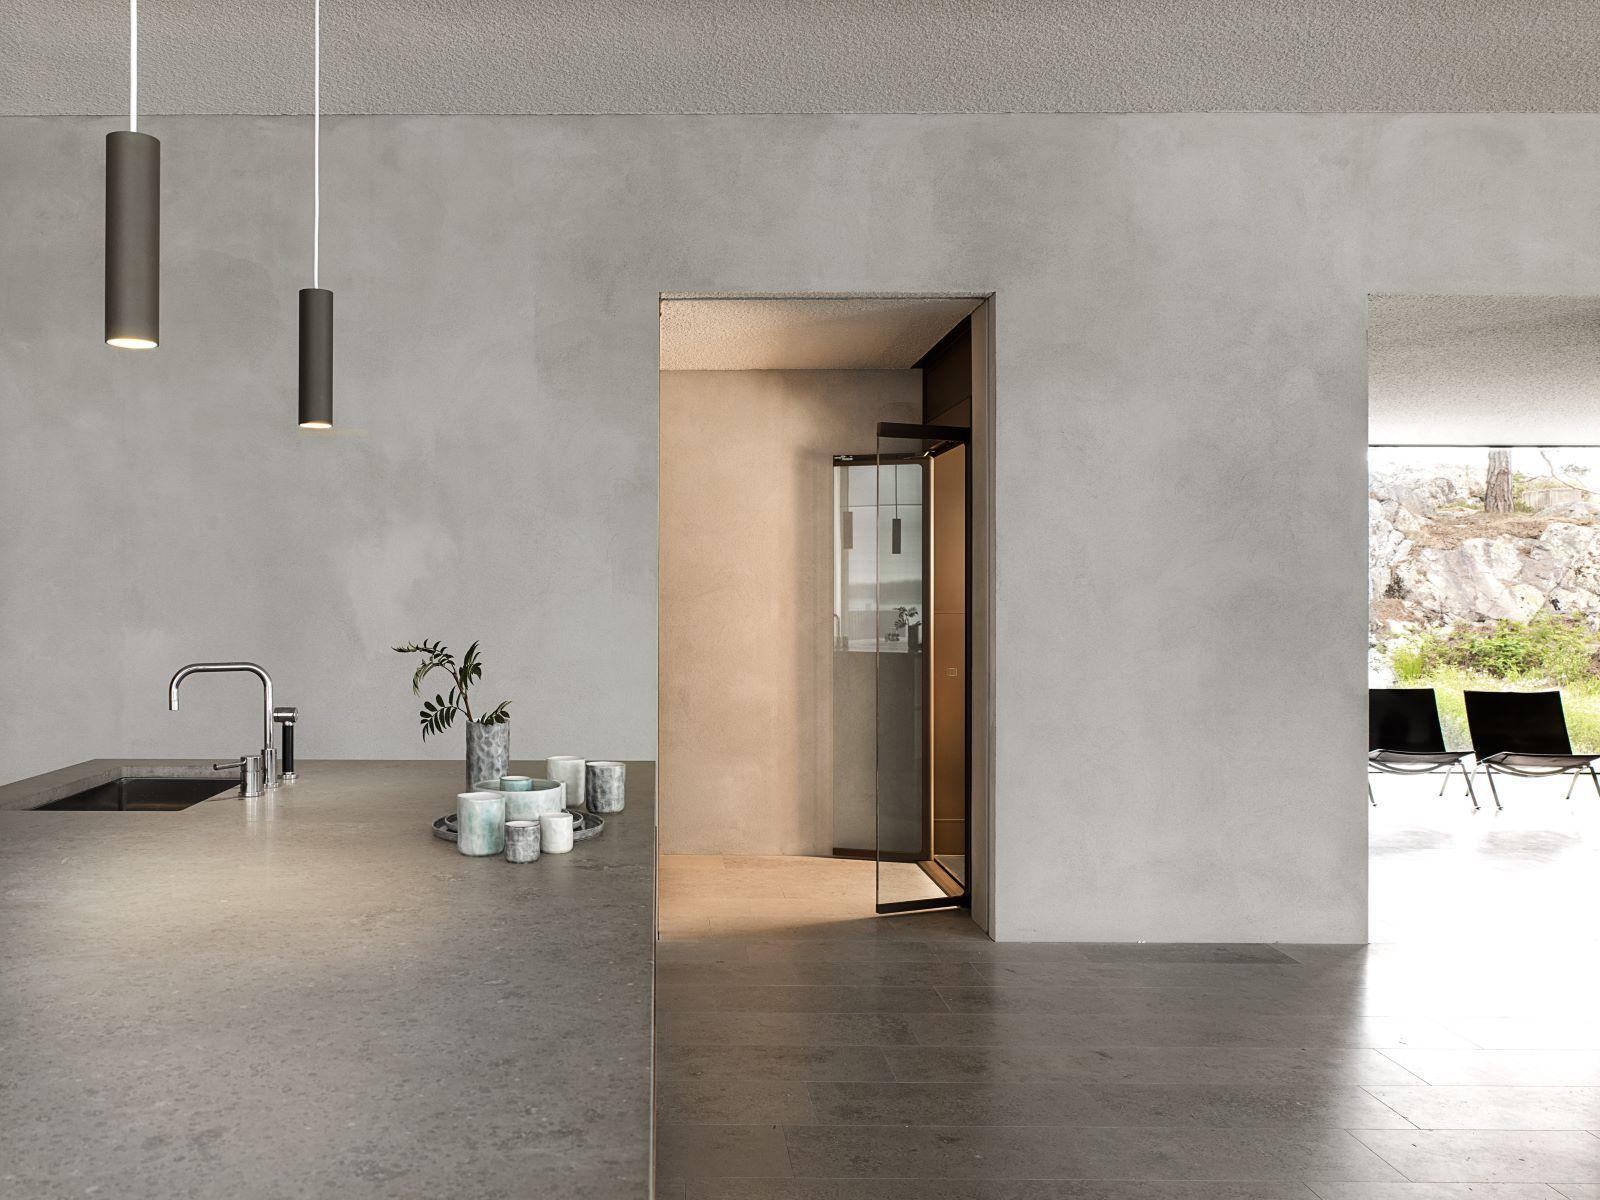 Home lift/elevator in a kitchen in Stockholm Archipelago villa. Model: Aritco HomeLift